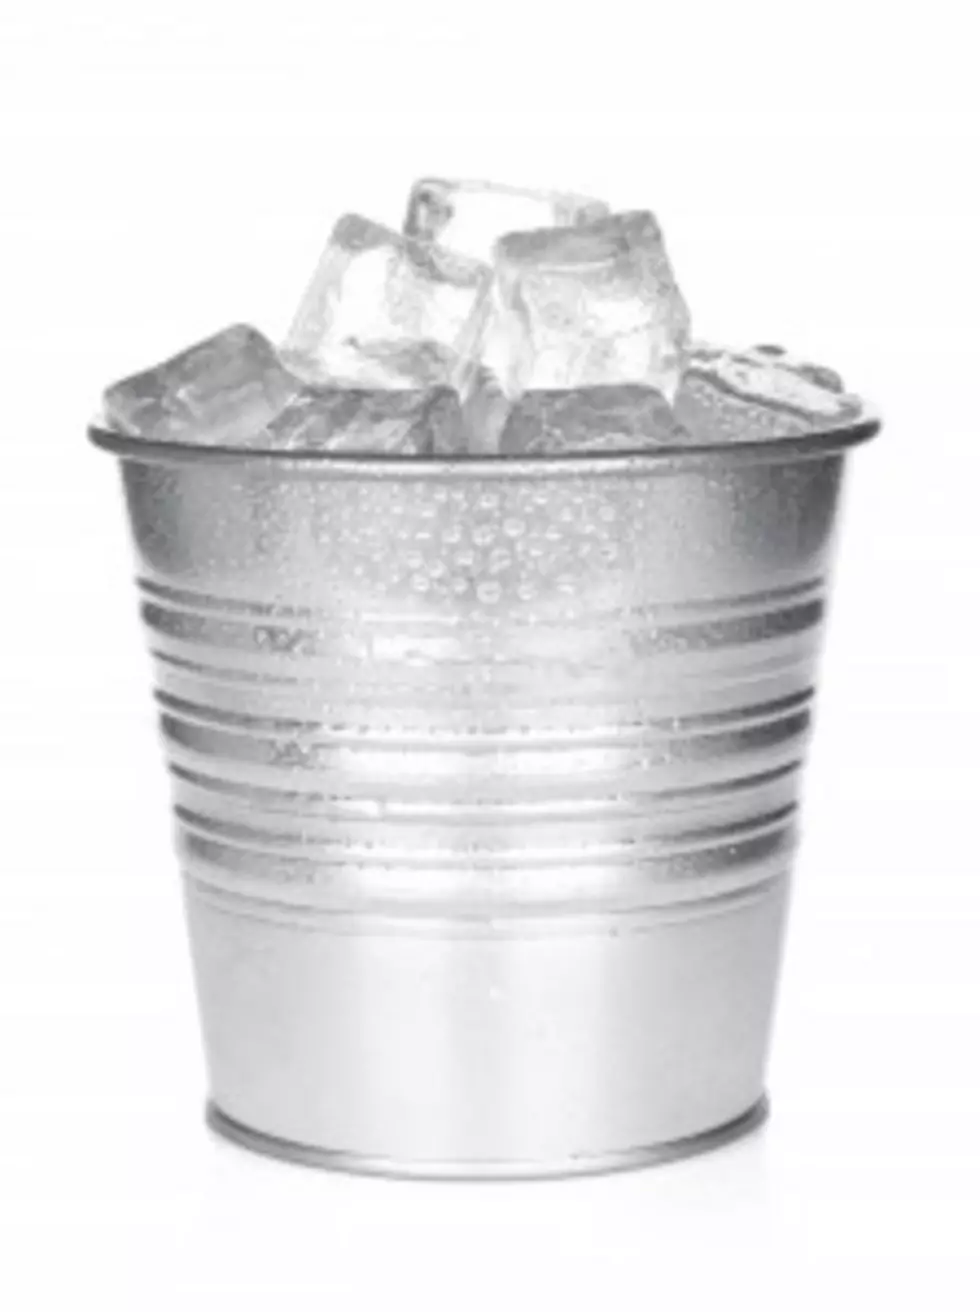 My Version of the ALS Ice Bucket Challenge